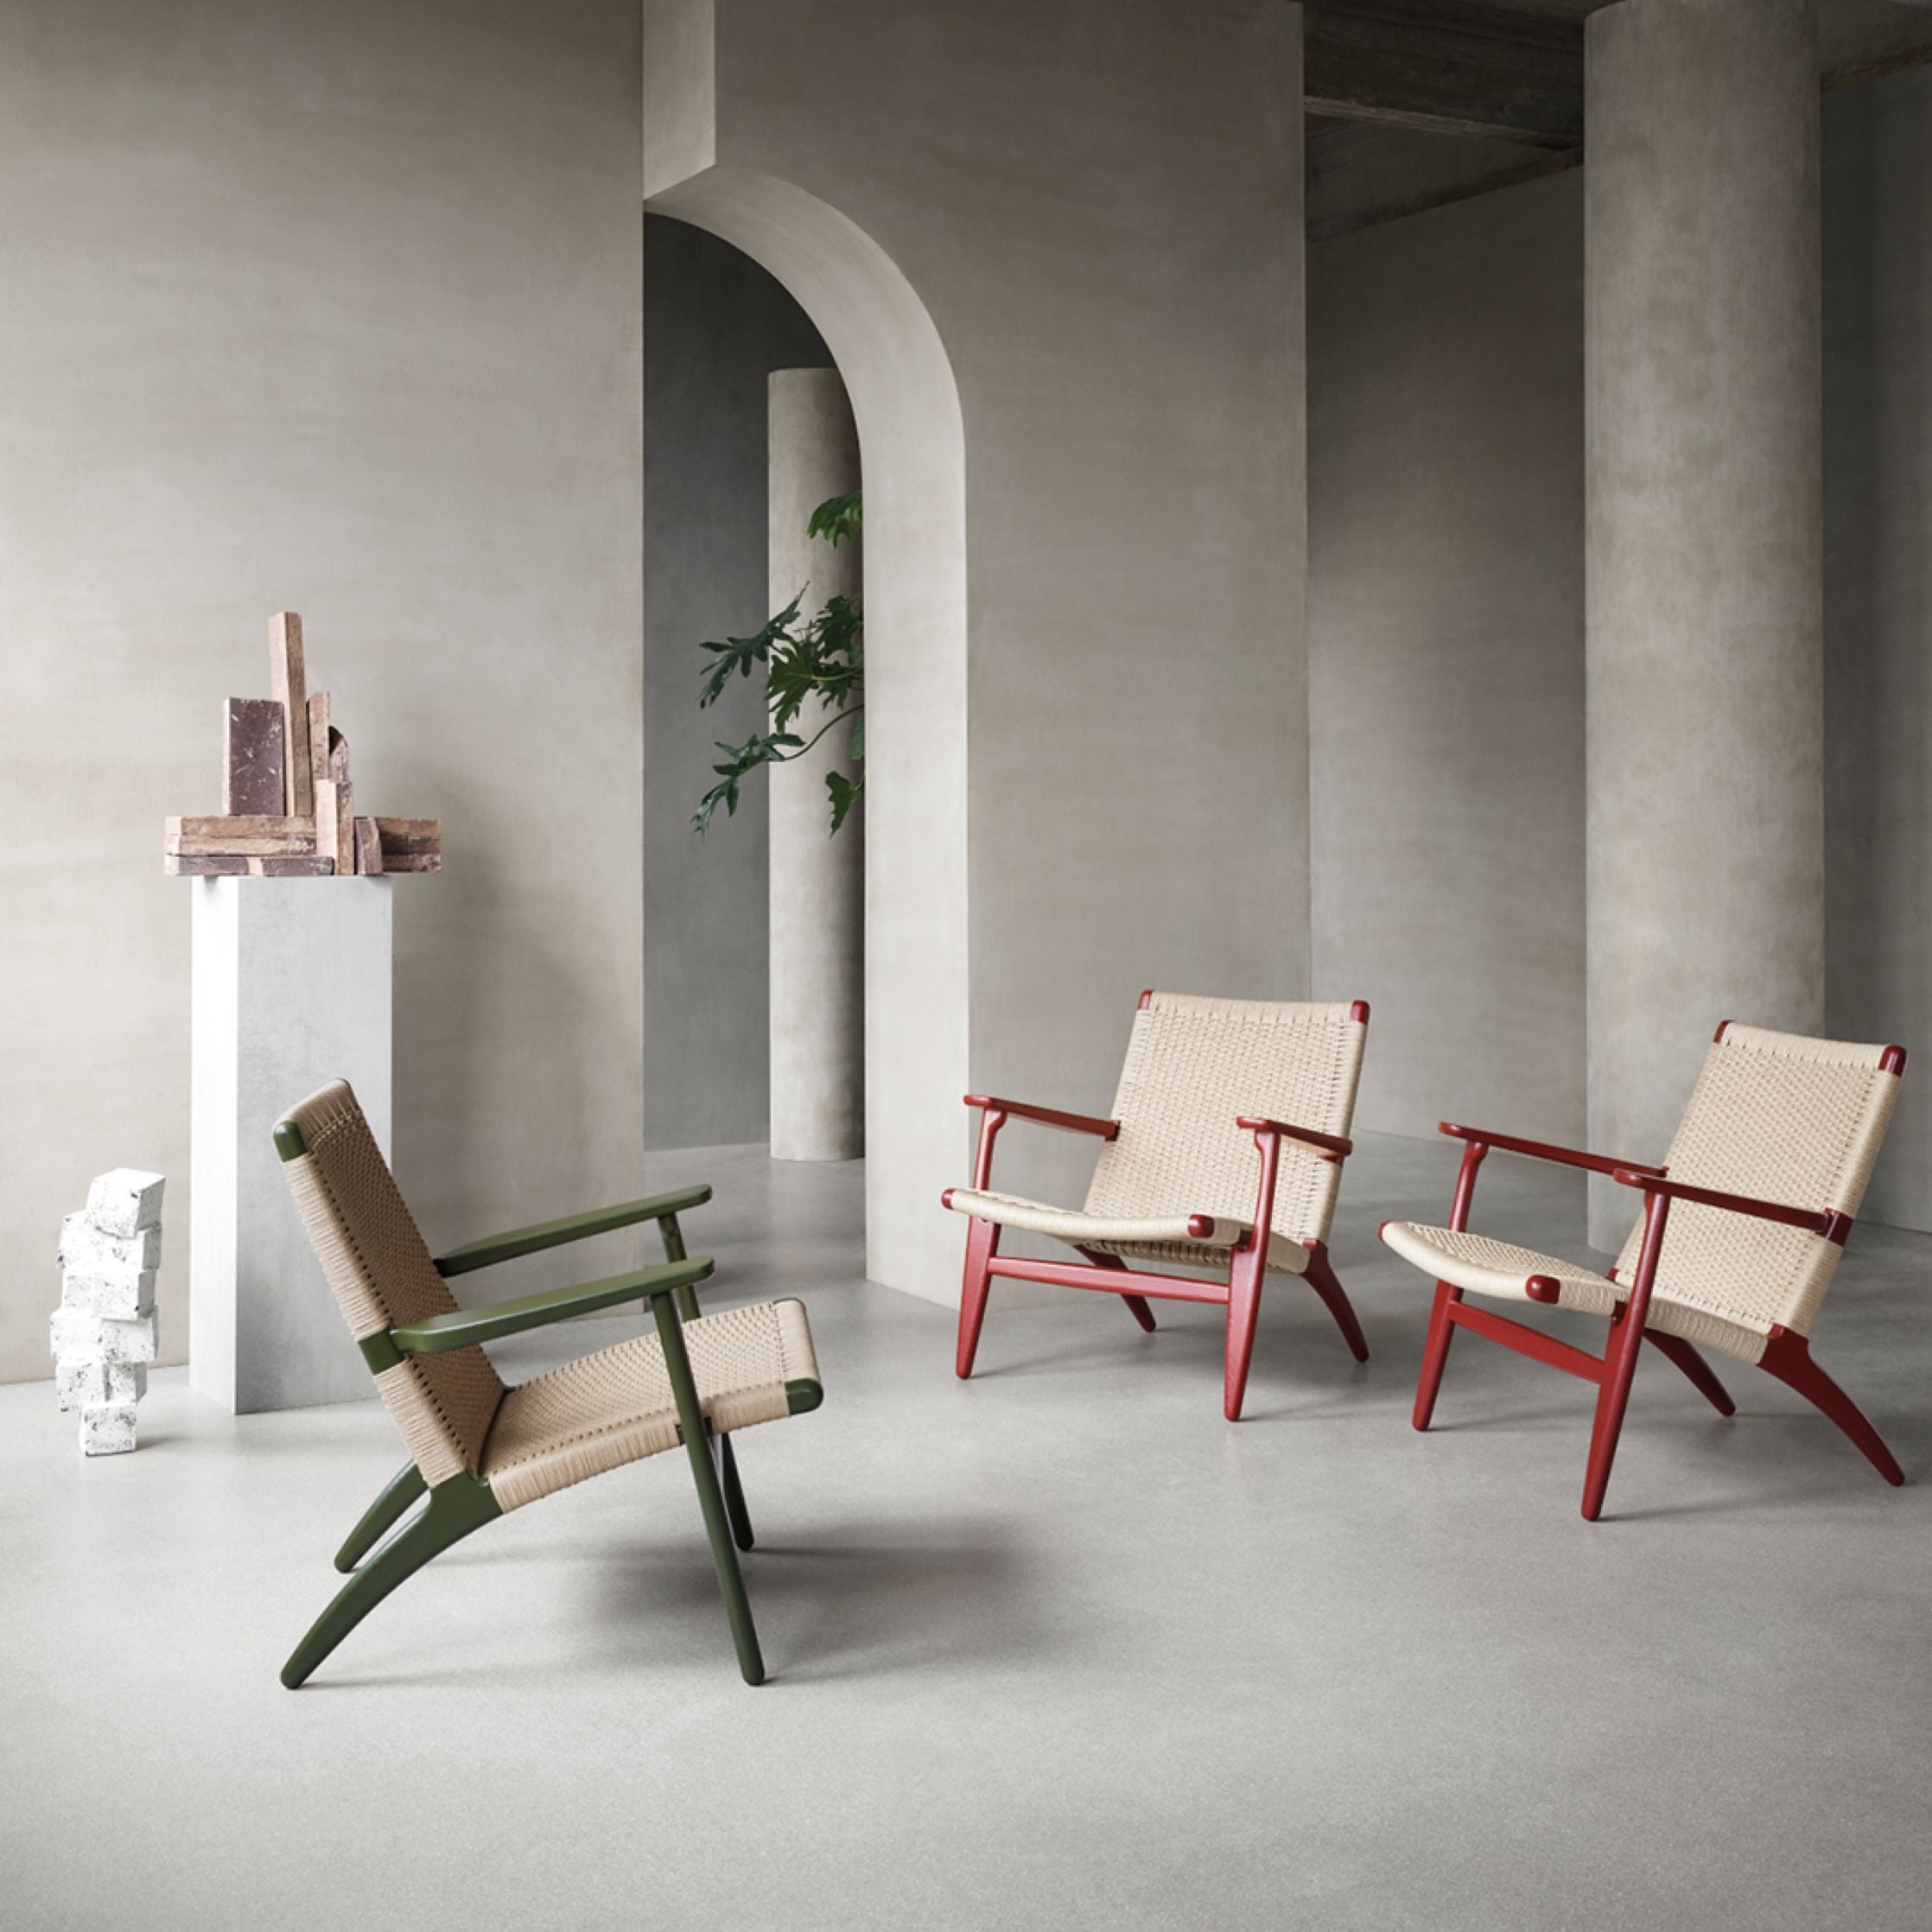 Carl Hansen CH25 Lounge Chair Oak, tånggrön/naturlig sladdad